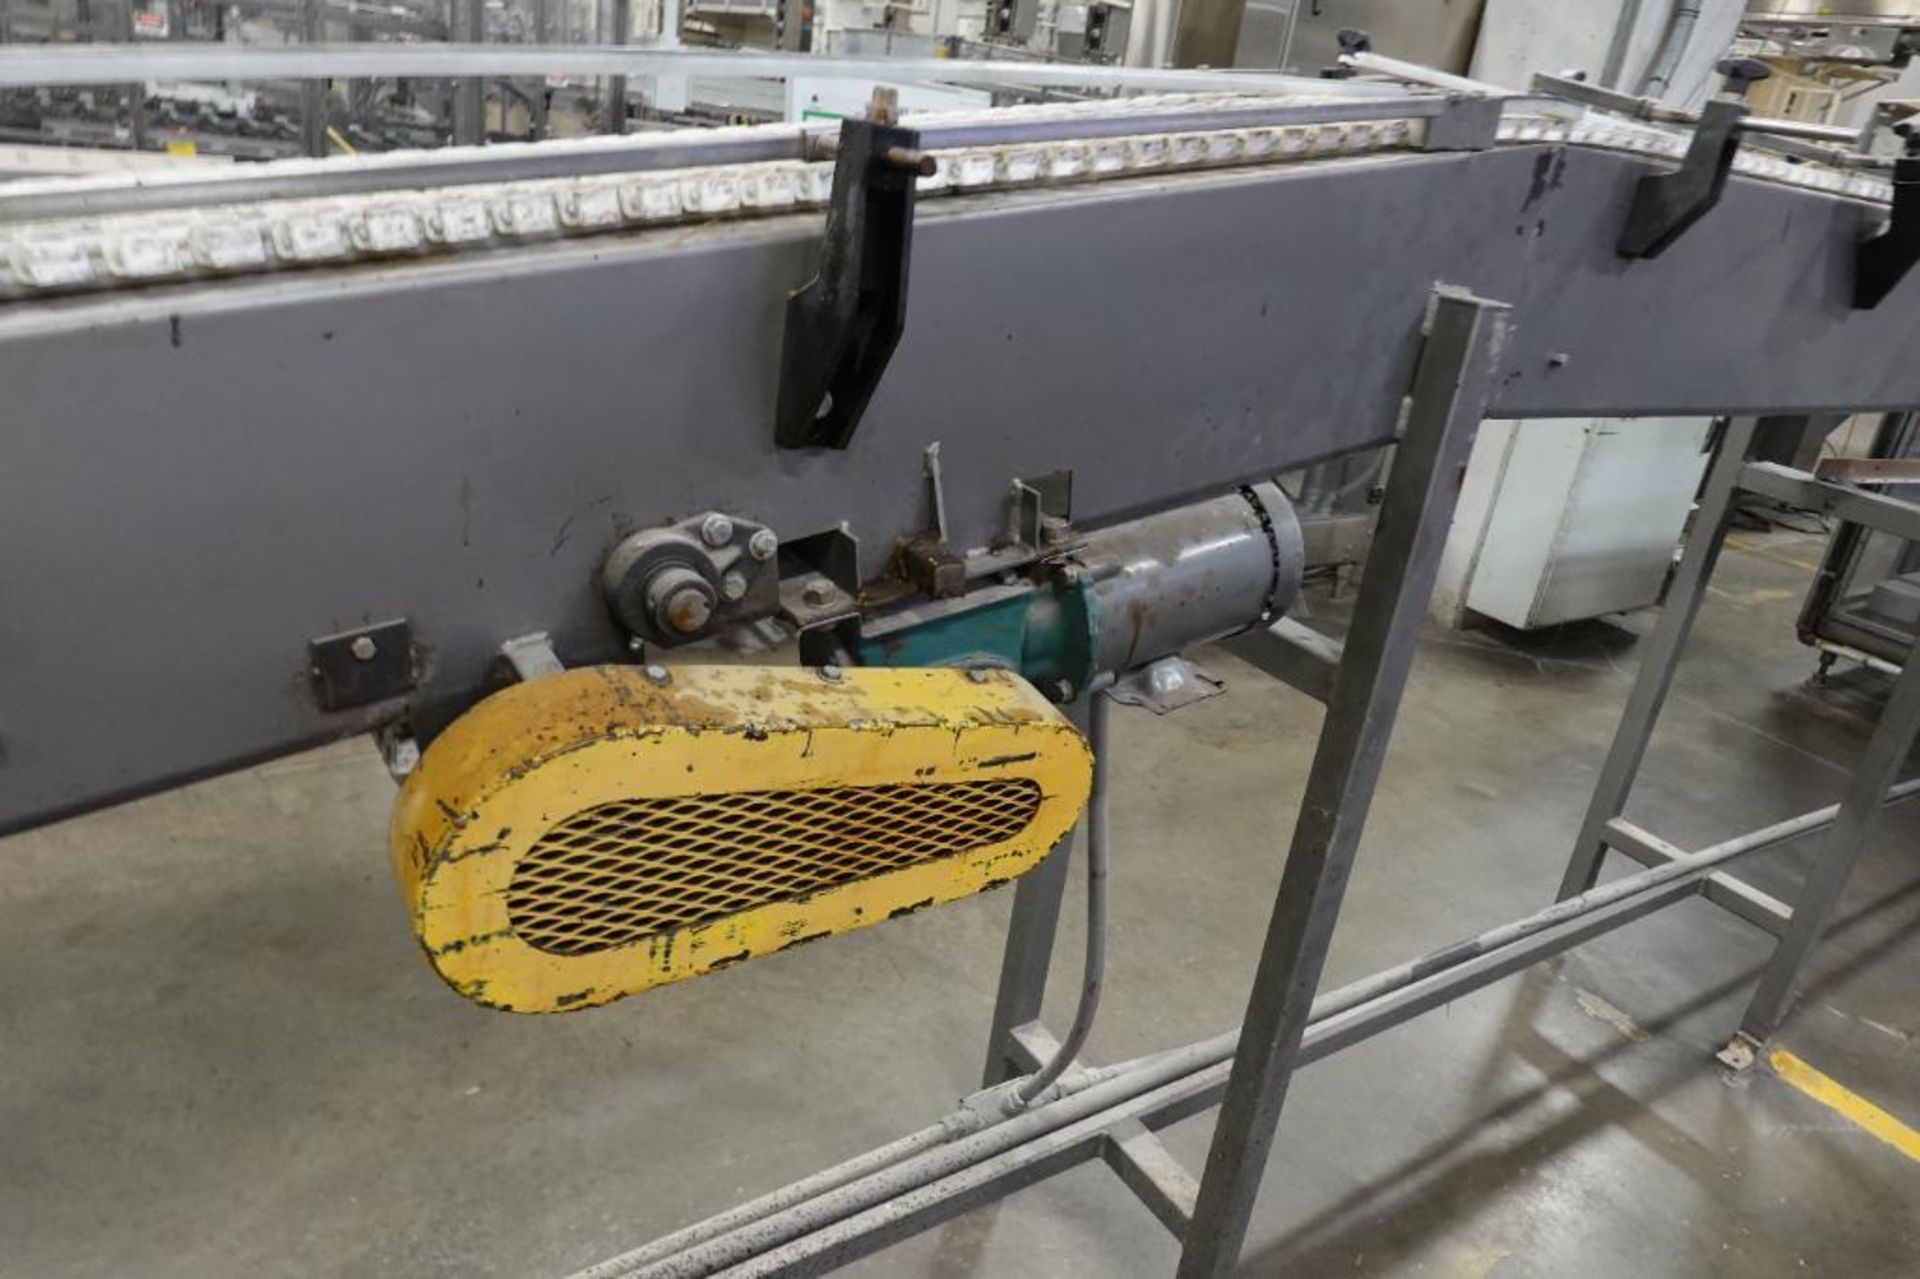 Safeline metal detector with conveyor - Image 11 of 14